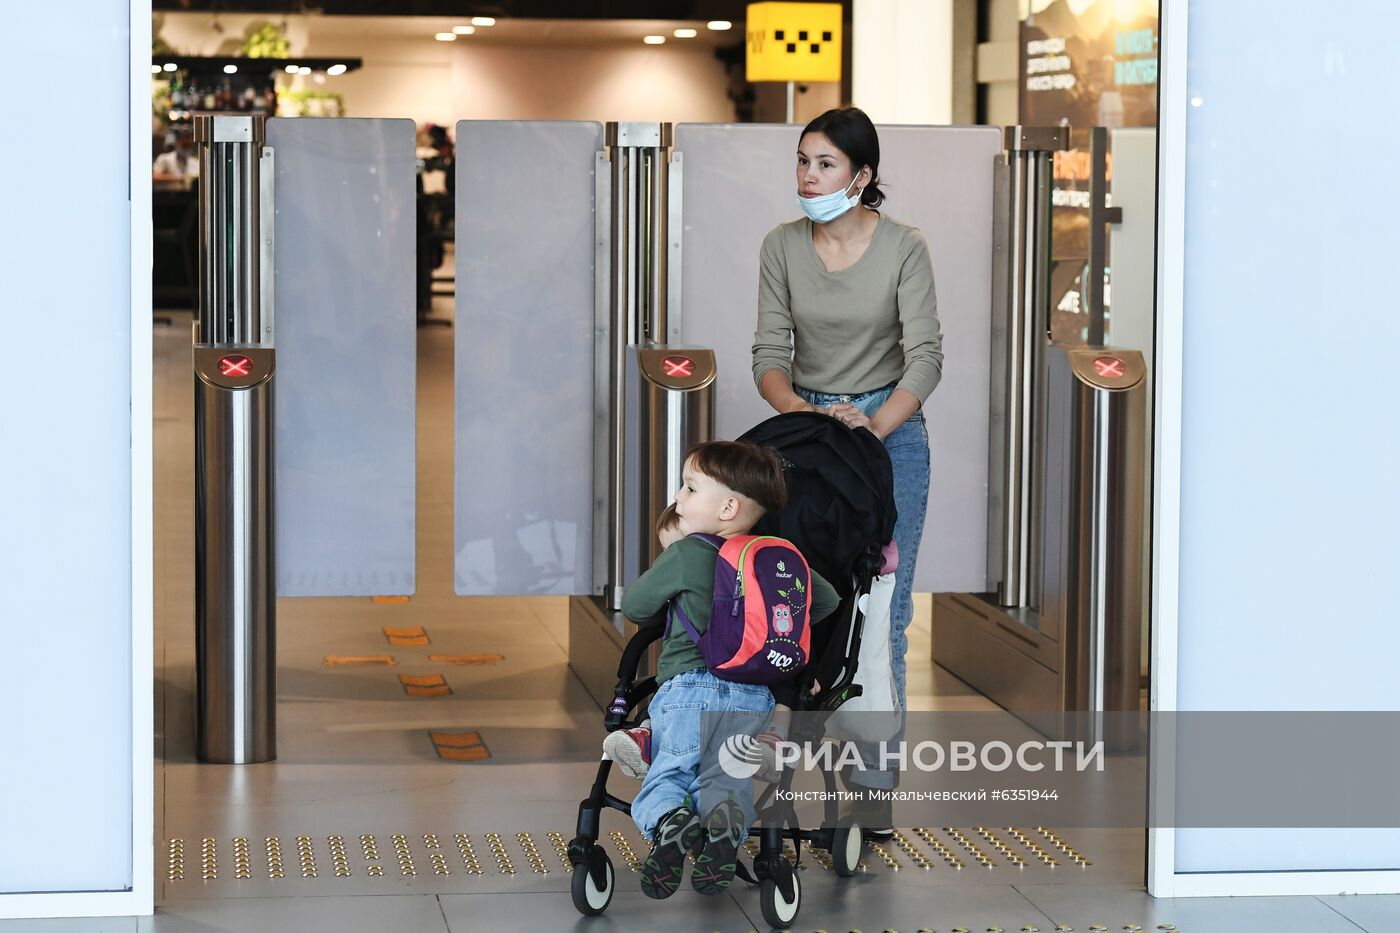 Ситуация в связи с коронавирусом в аэропорту Симферополя